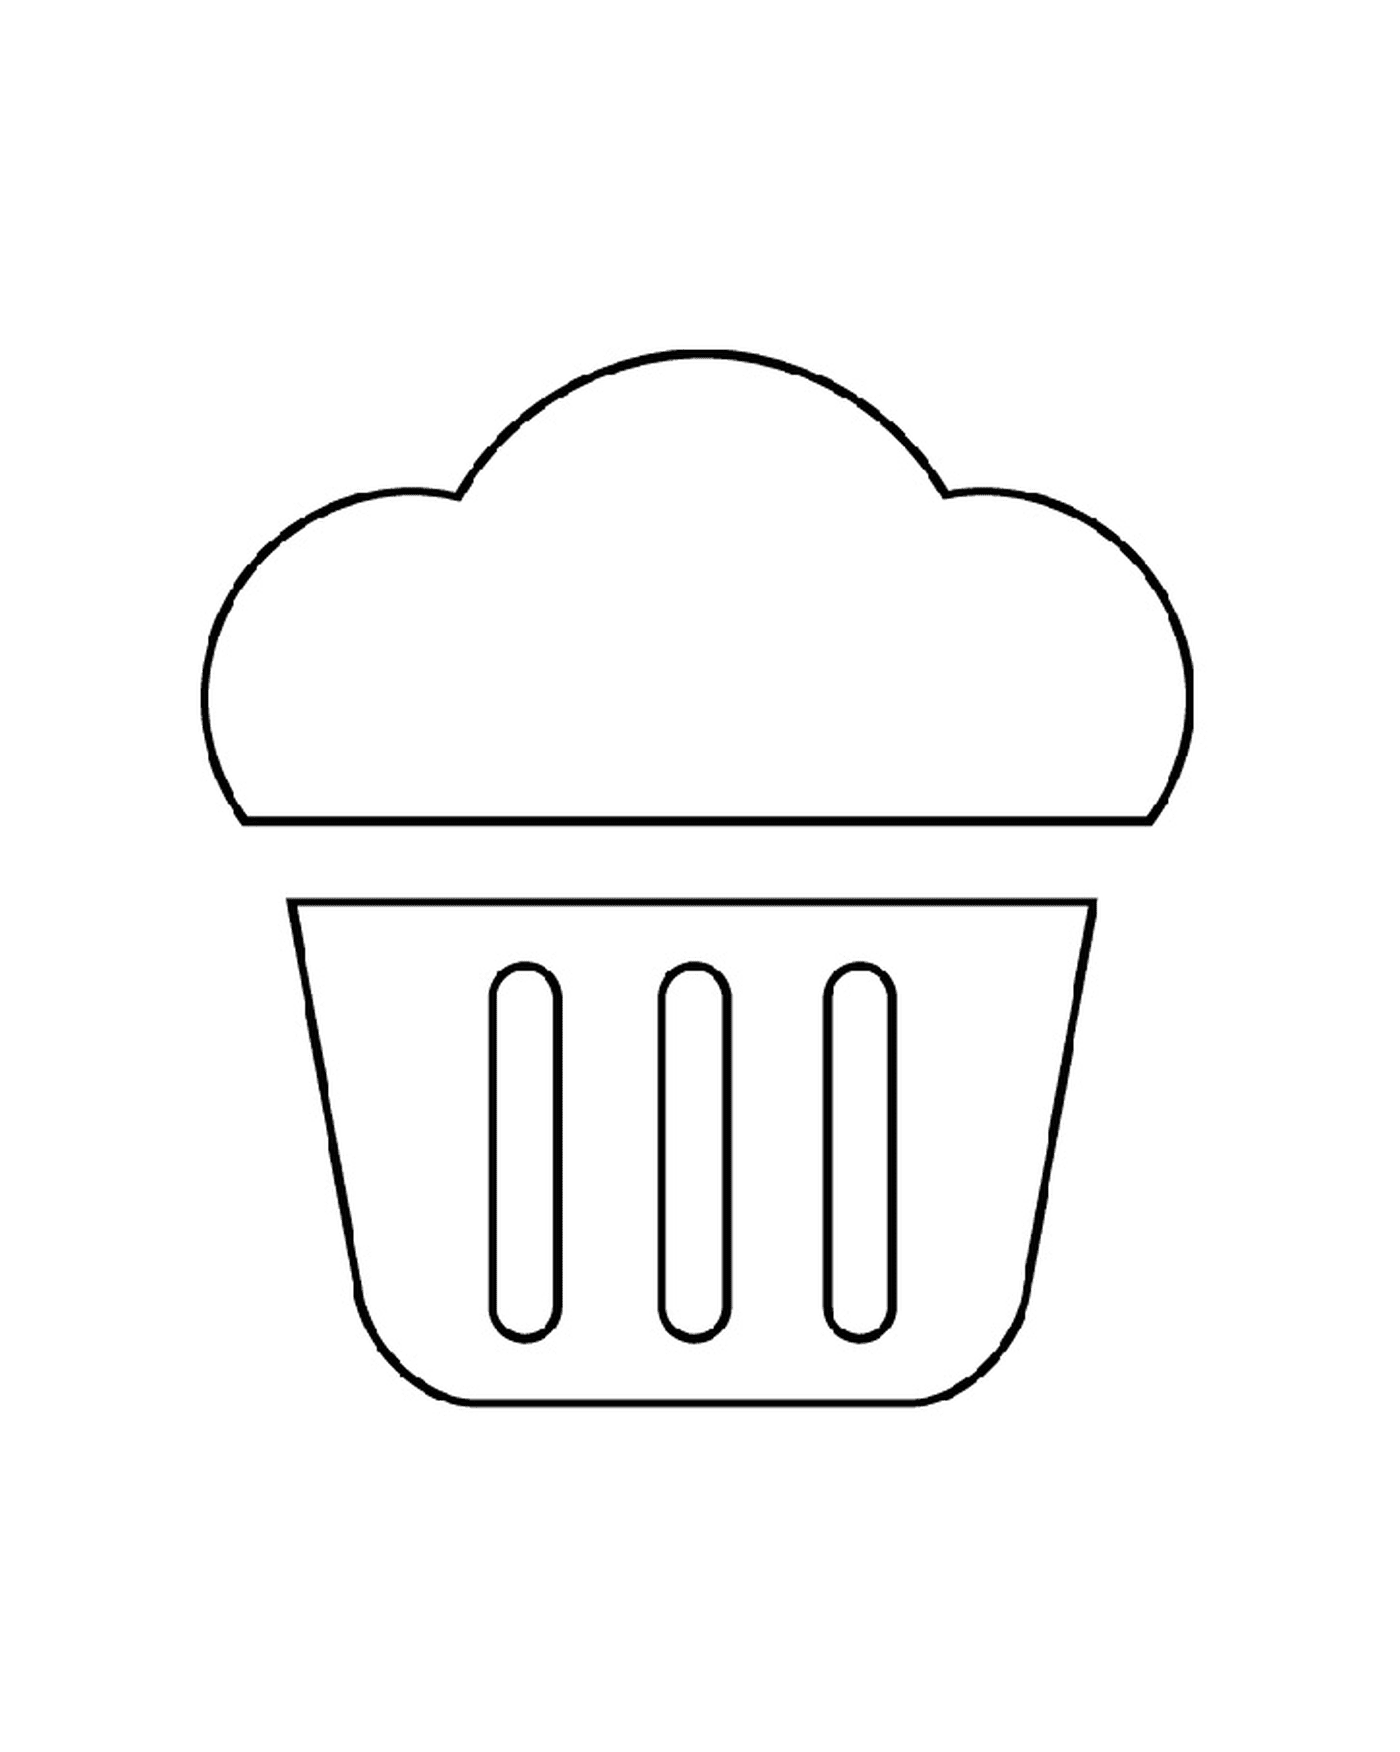  A cupcake cake 